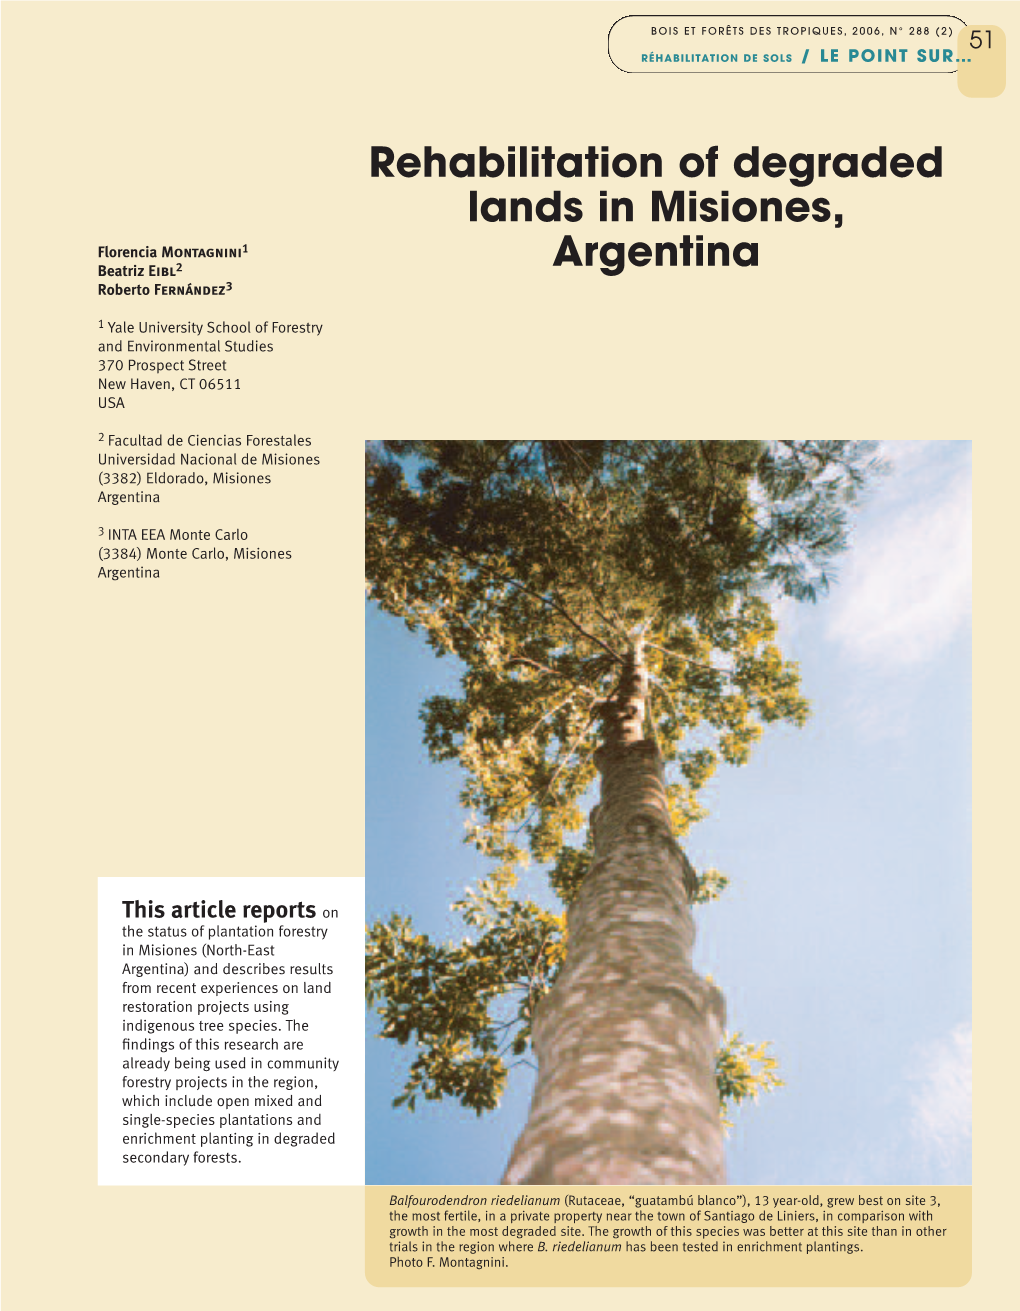 Rehabilitation of Degraded Lands in Misiones, Argentina